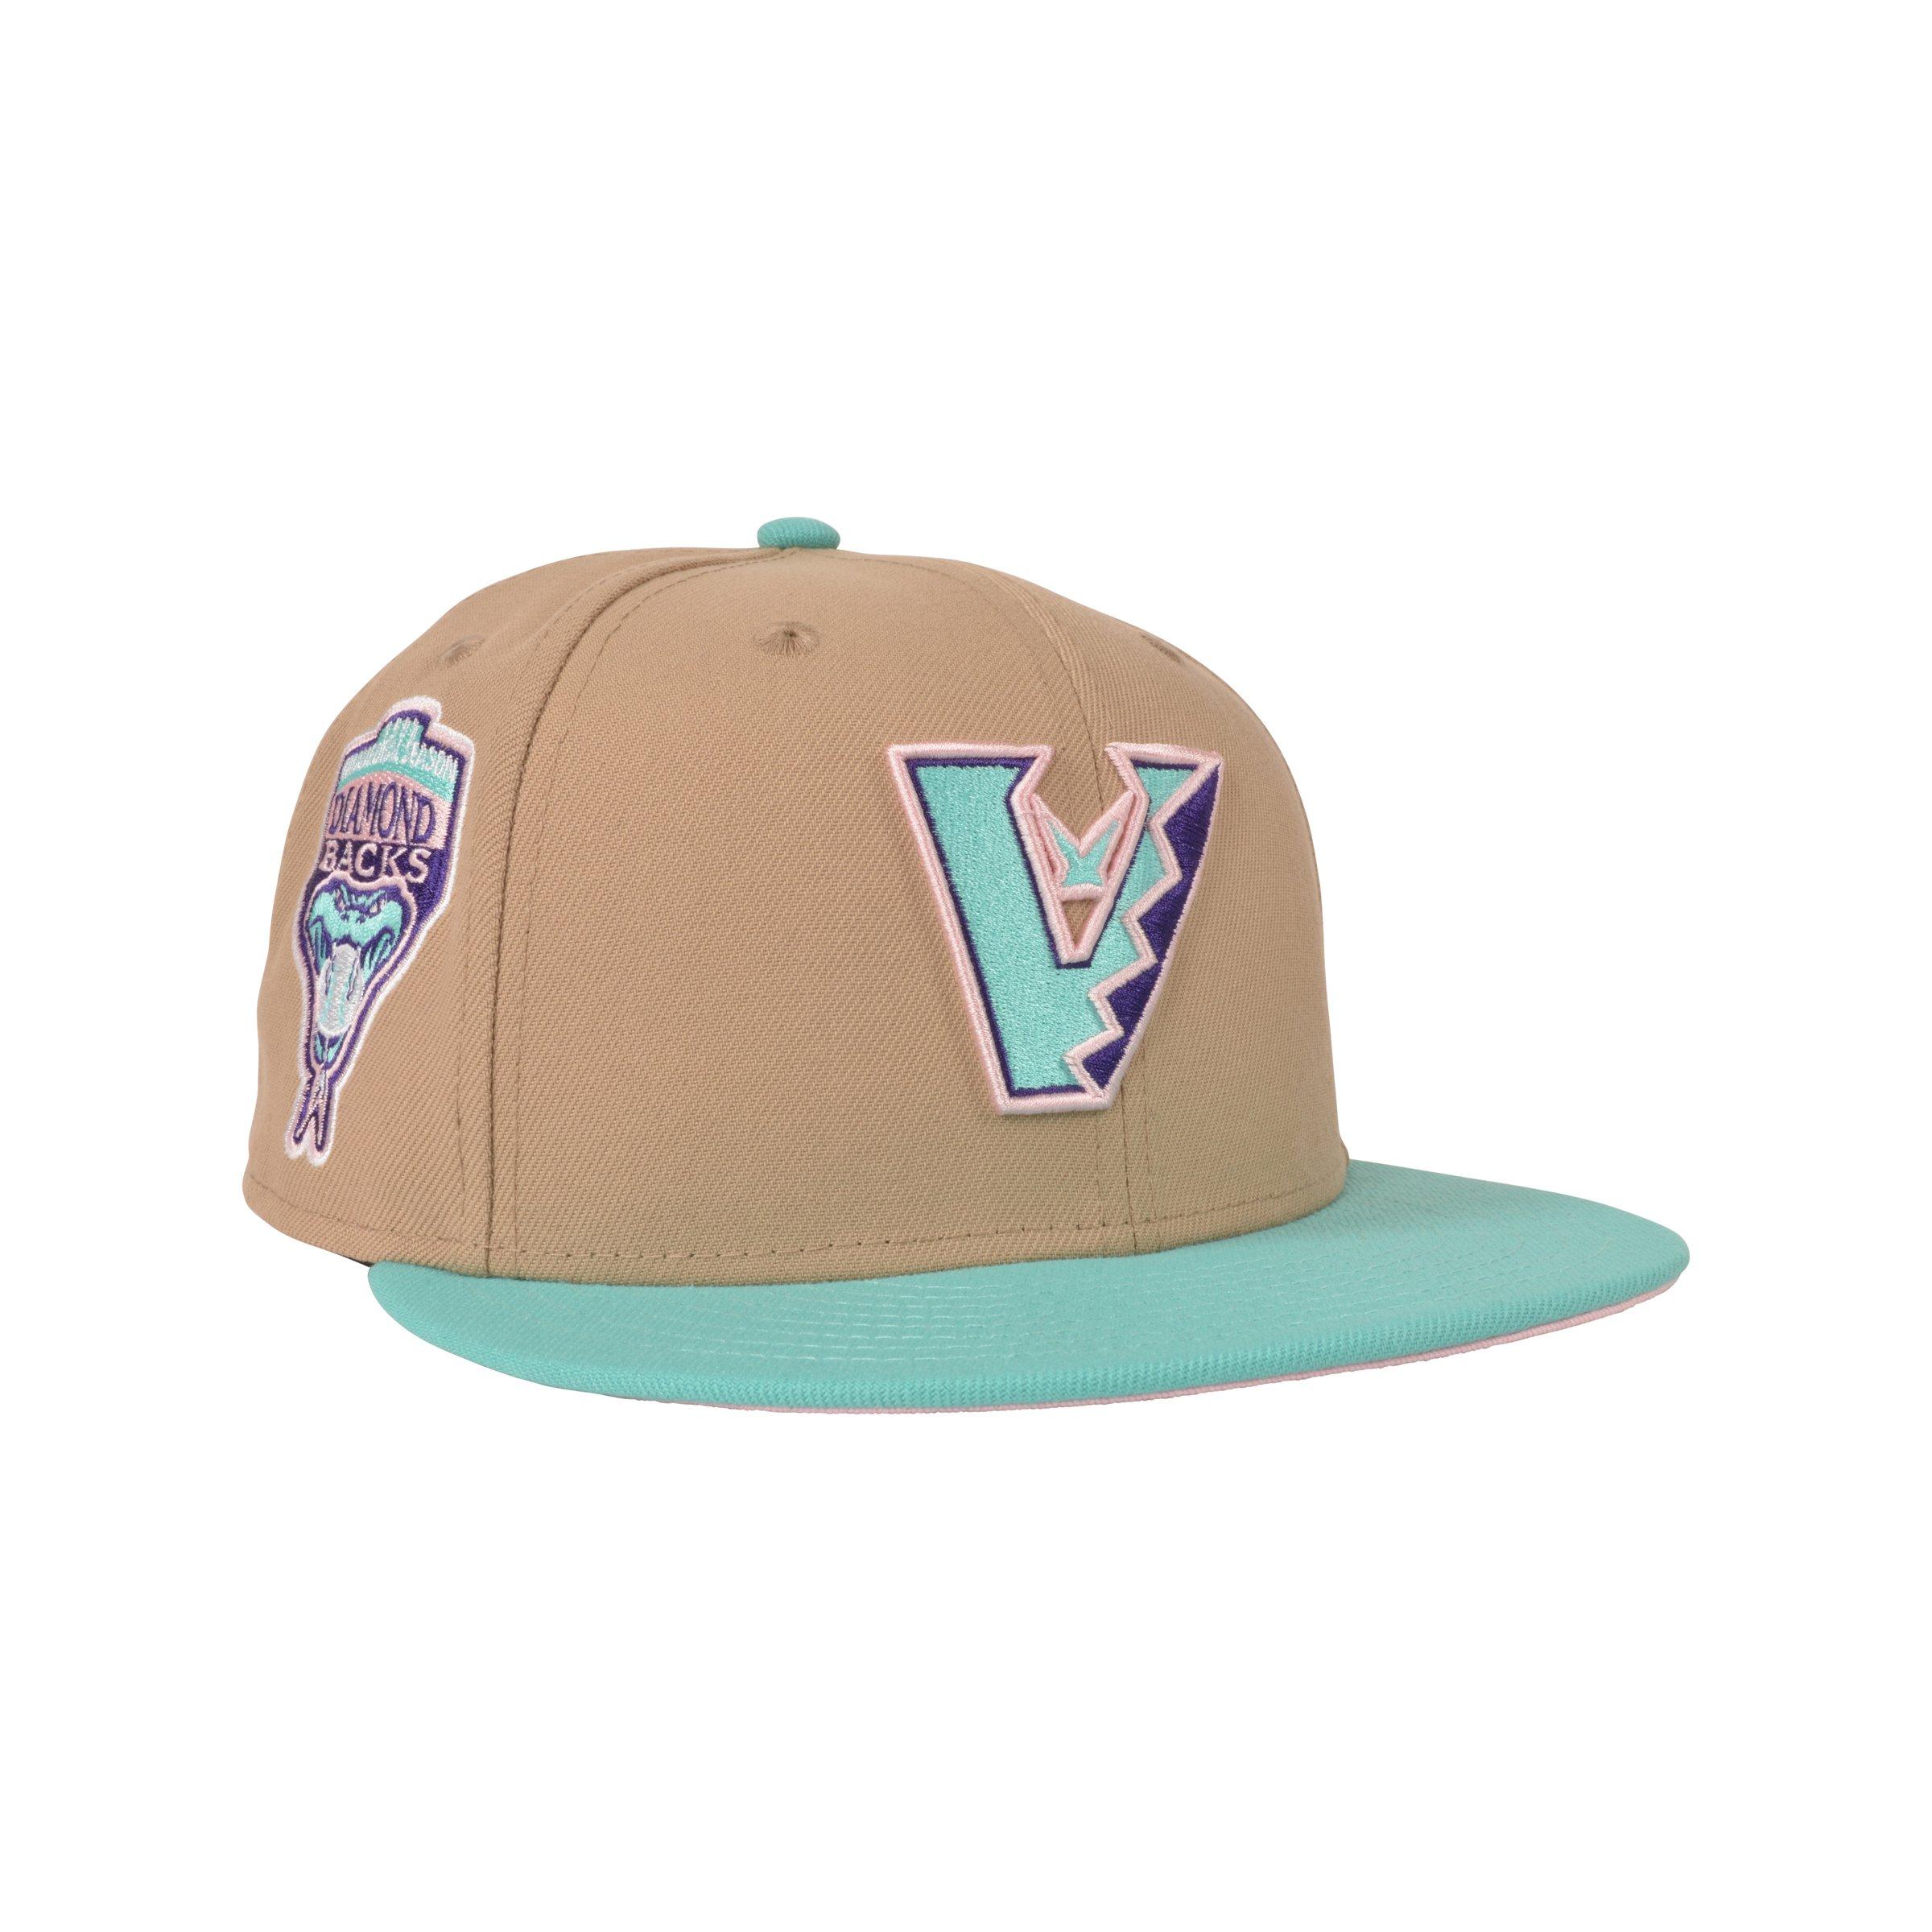 New Era Arizona Diamondbacks Upside Down Pack 9FIFTY Snapback Hat